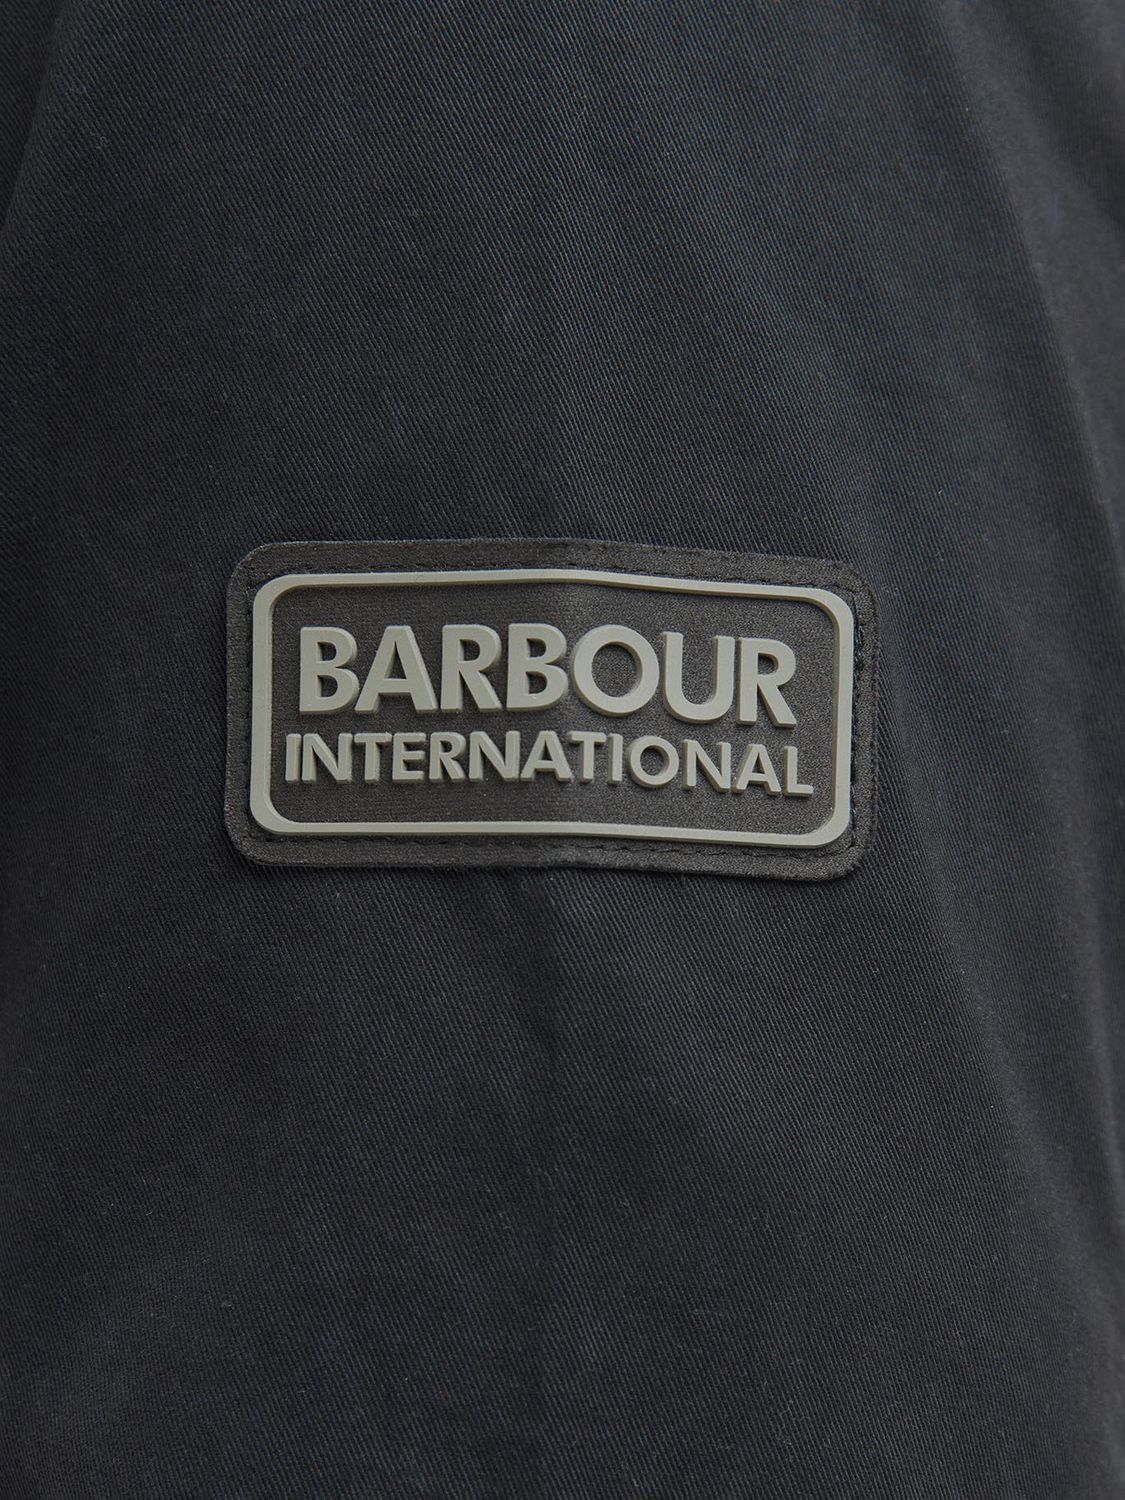 Barbour International Adey Cotton Overshirt, Black at John Lewis & Partners